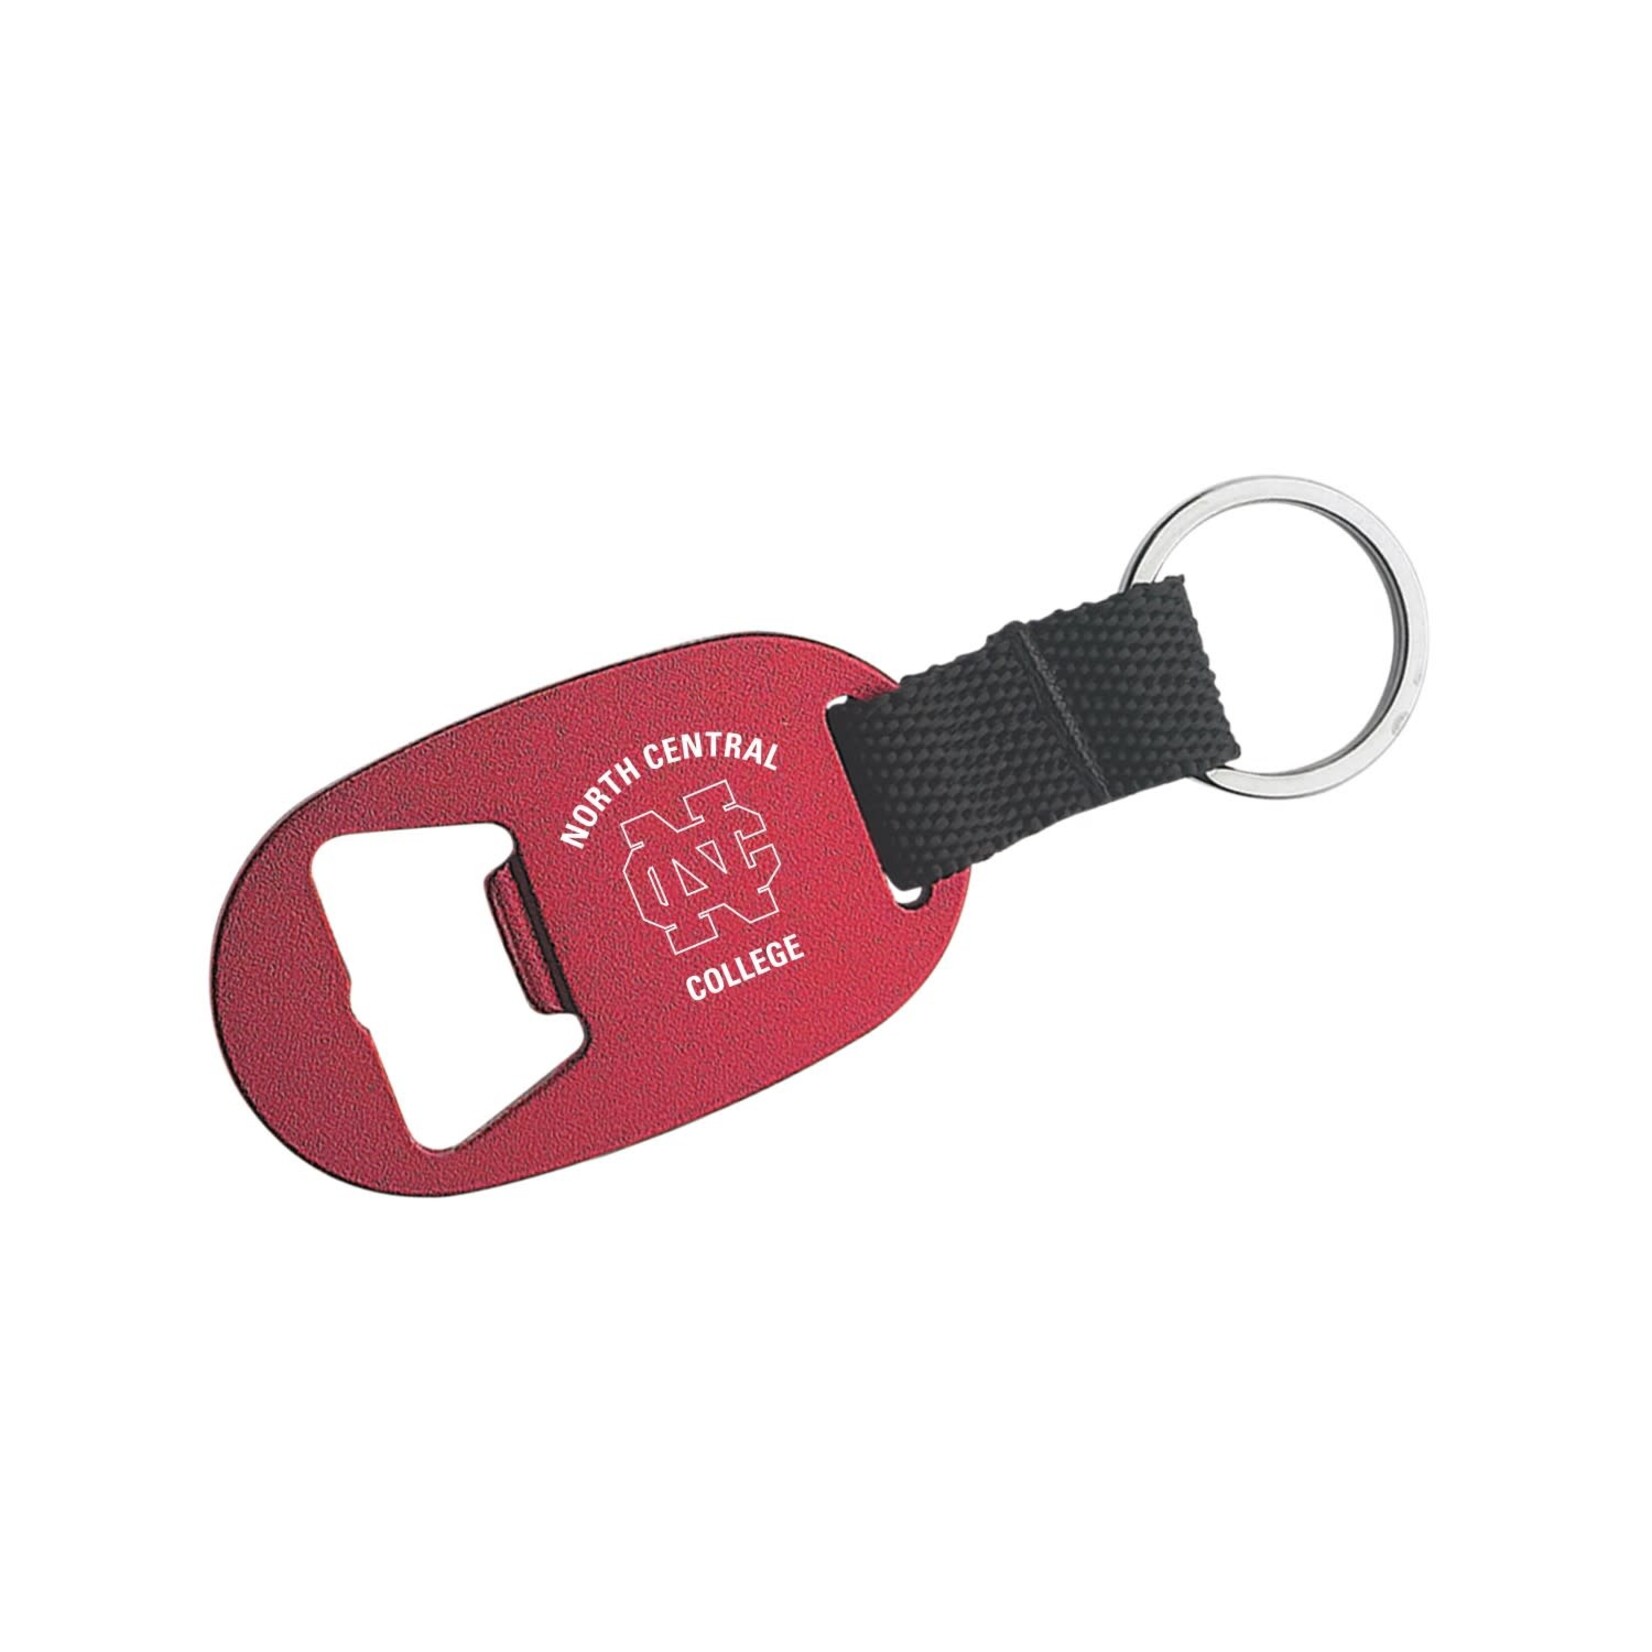 Jardine Associates North Central College red bottle opener key chain by Jardineby Jardine